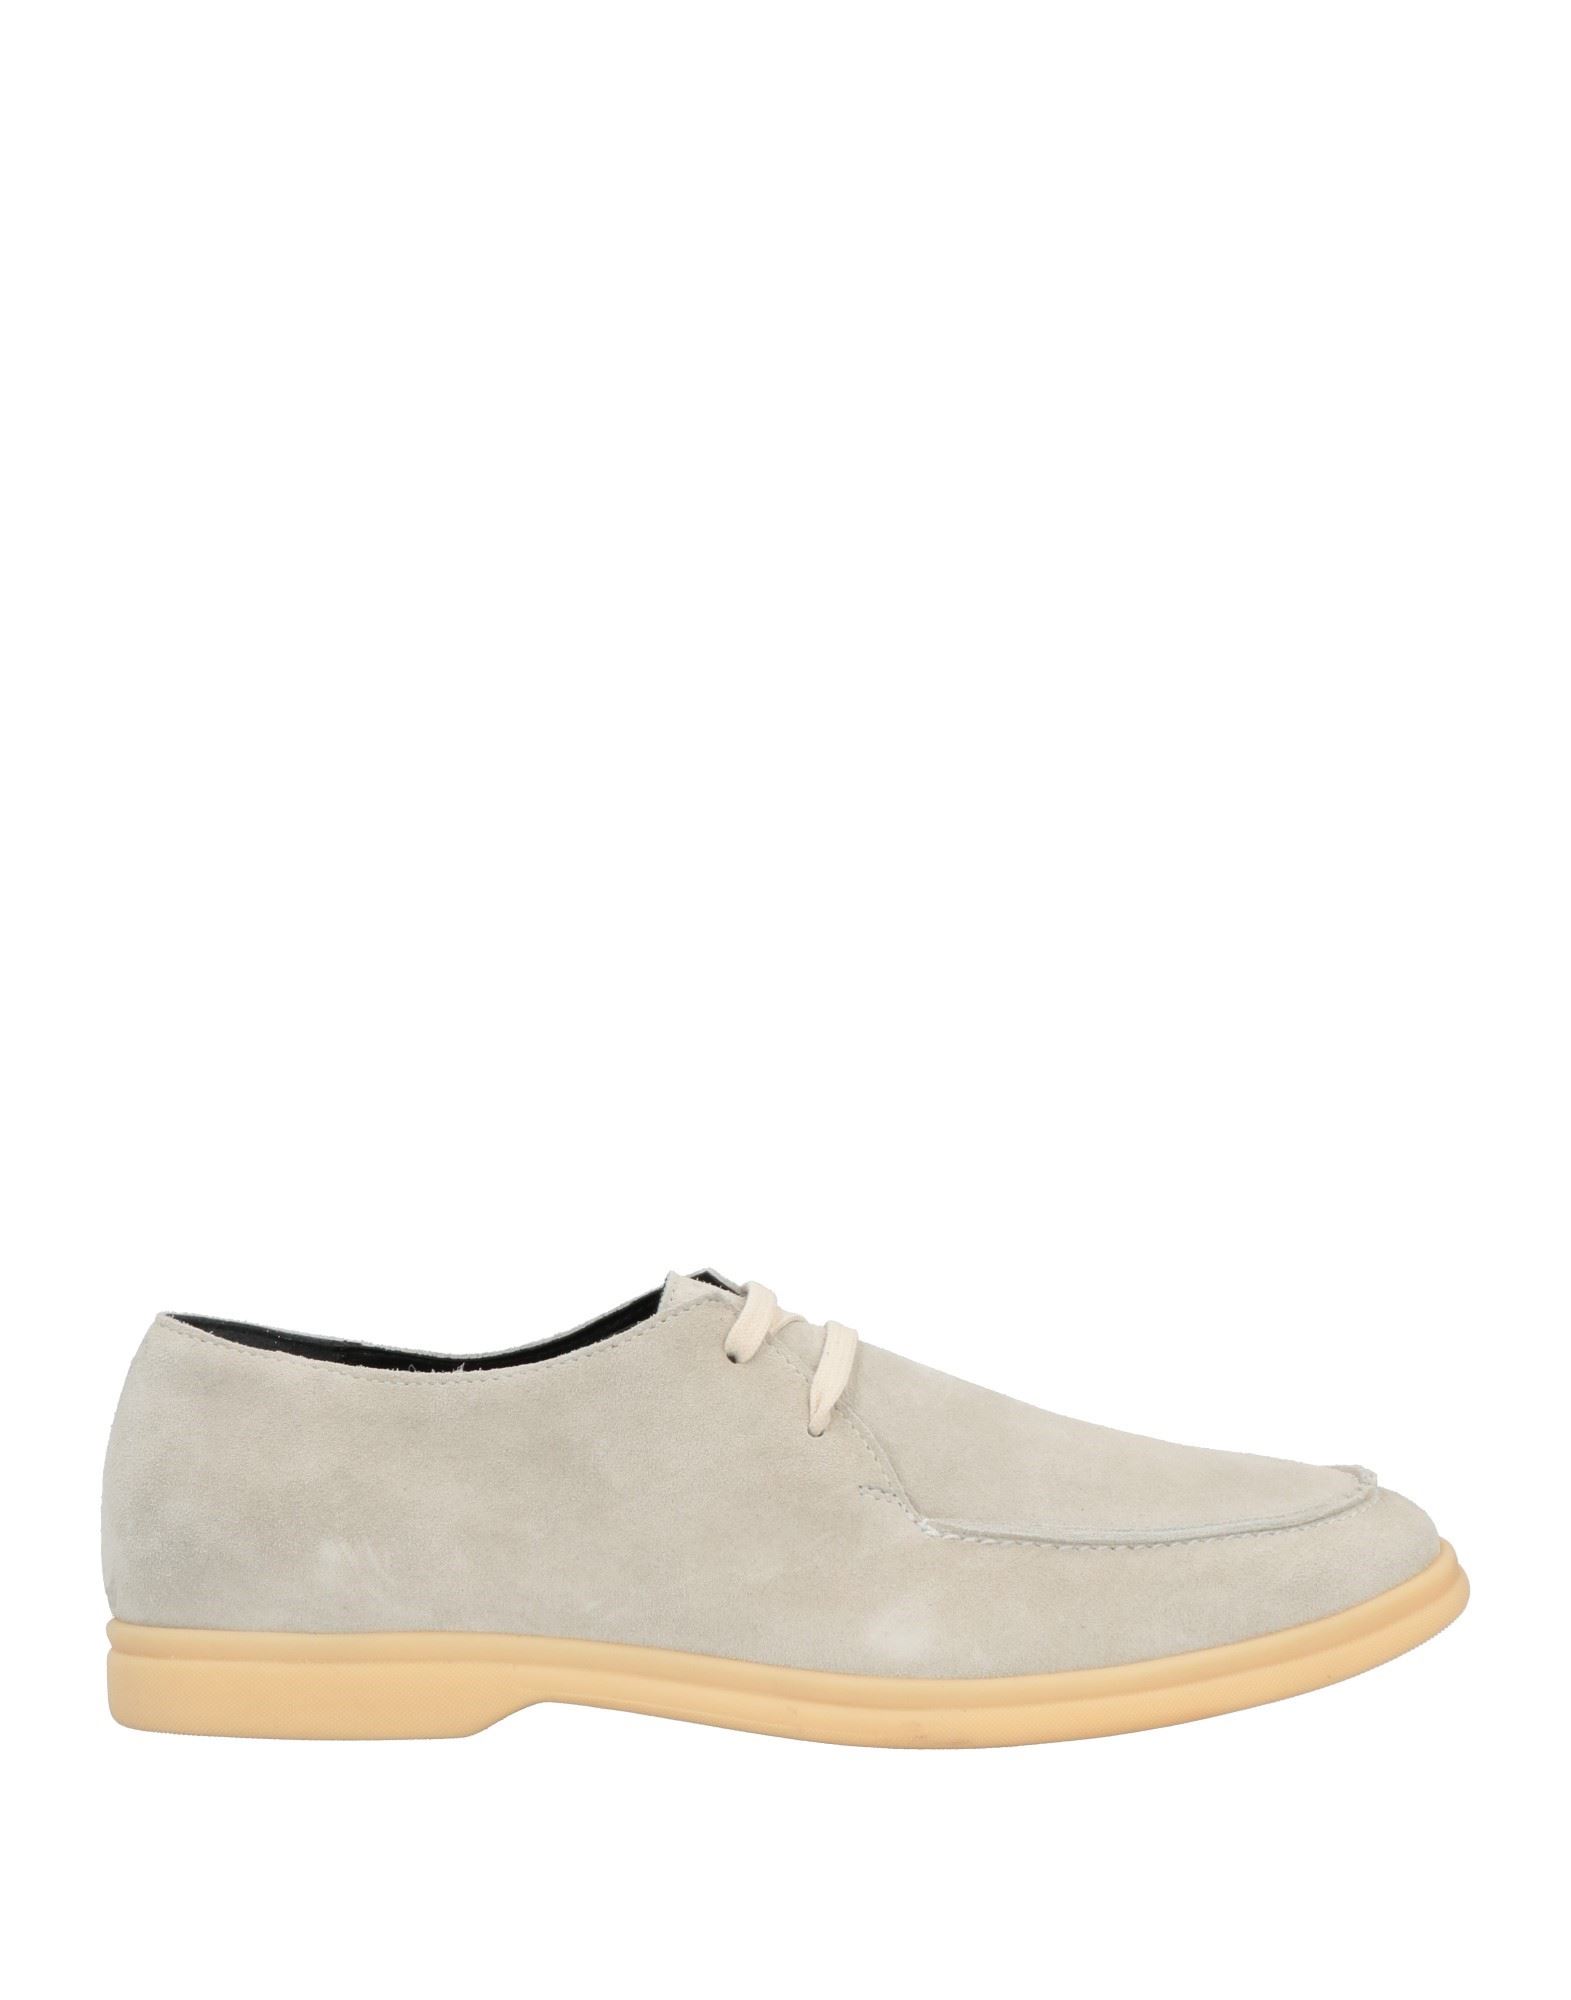 Shop Boemos Man Lace-up Shoes Light Grey Size 9 Soft Leather